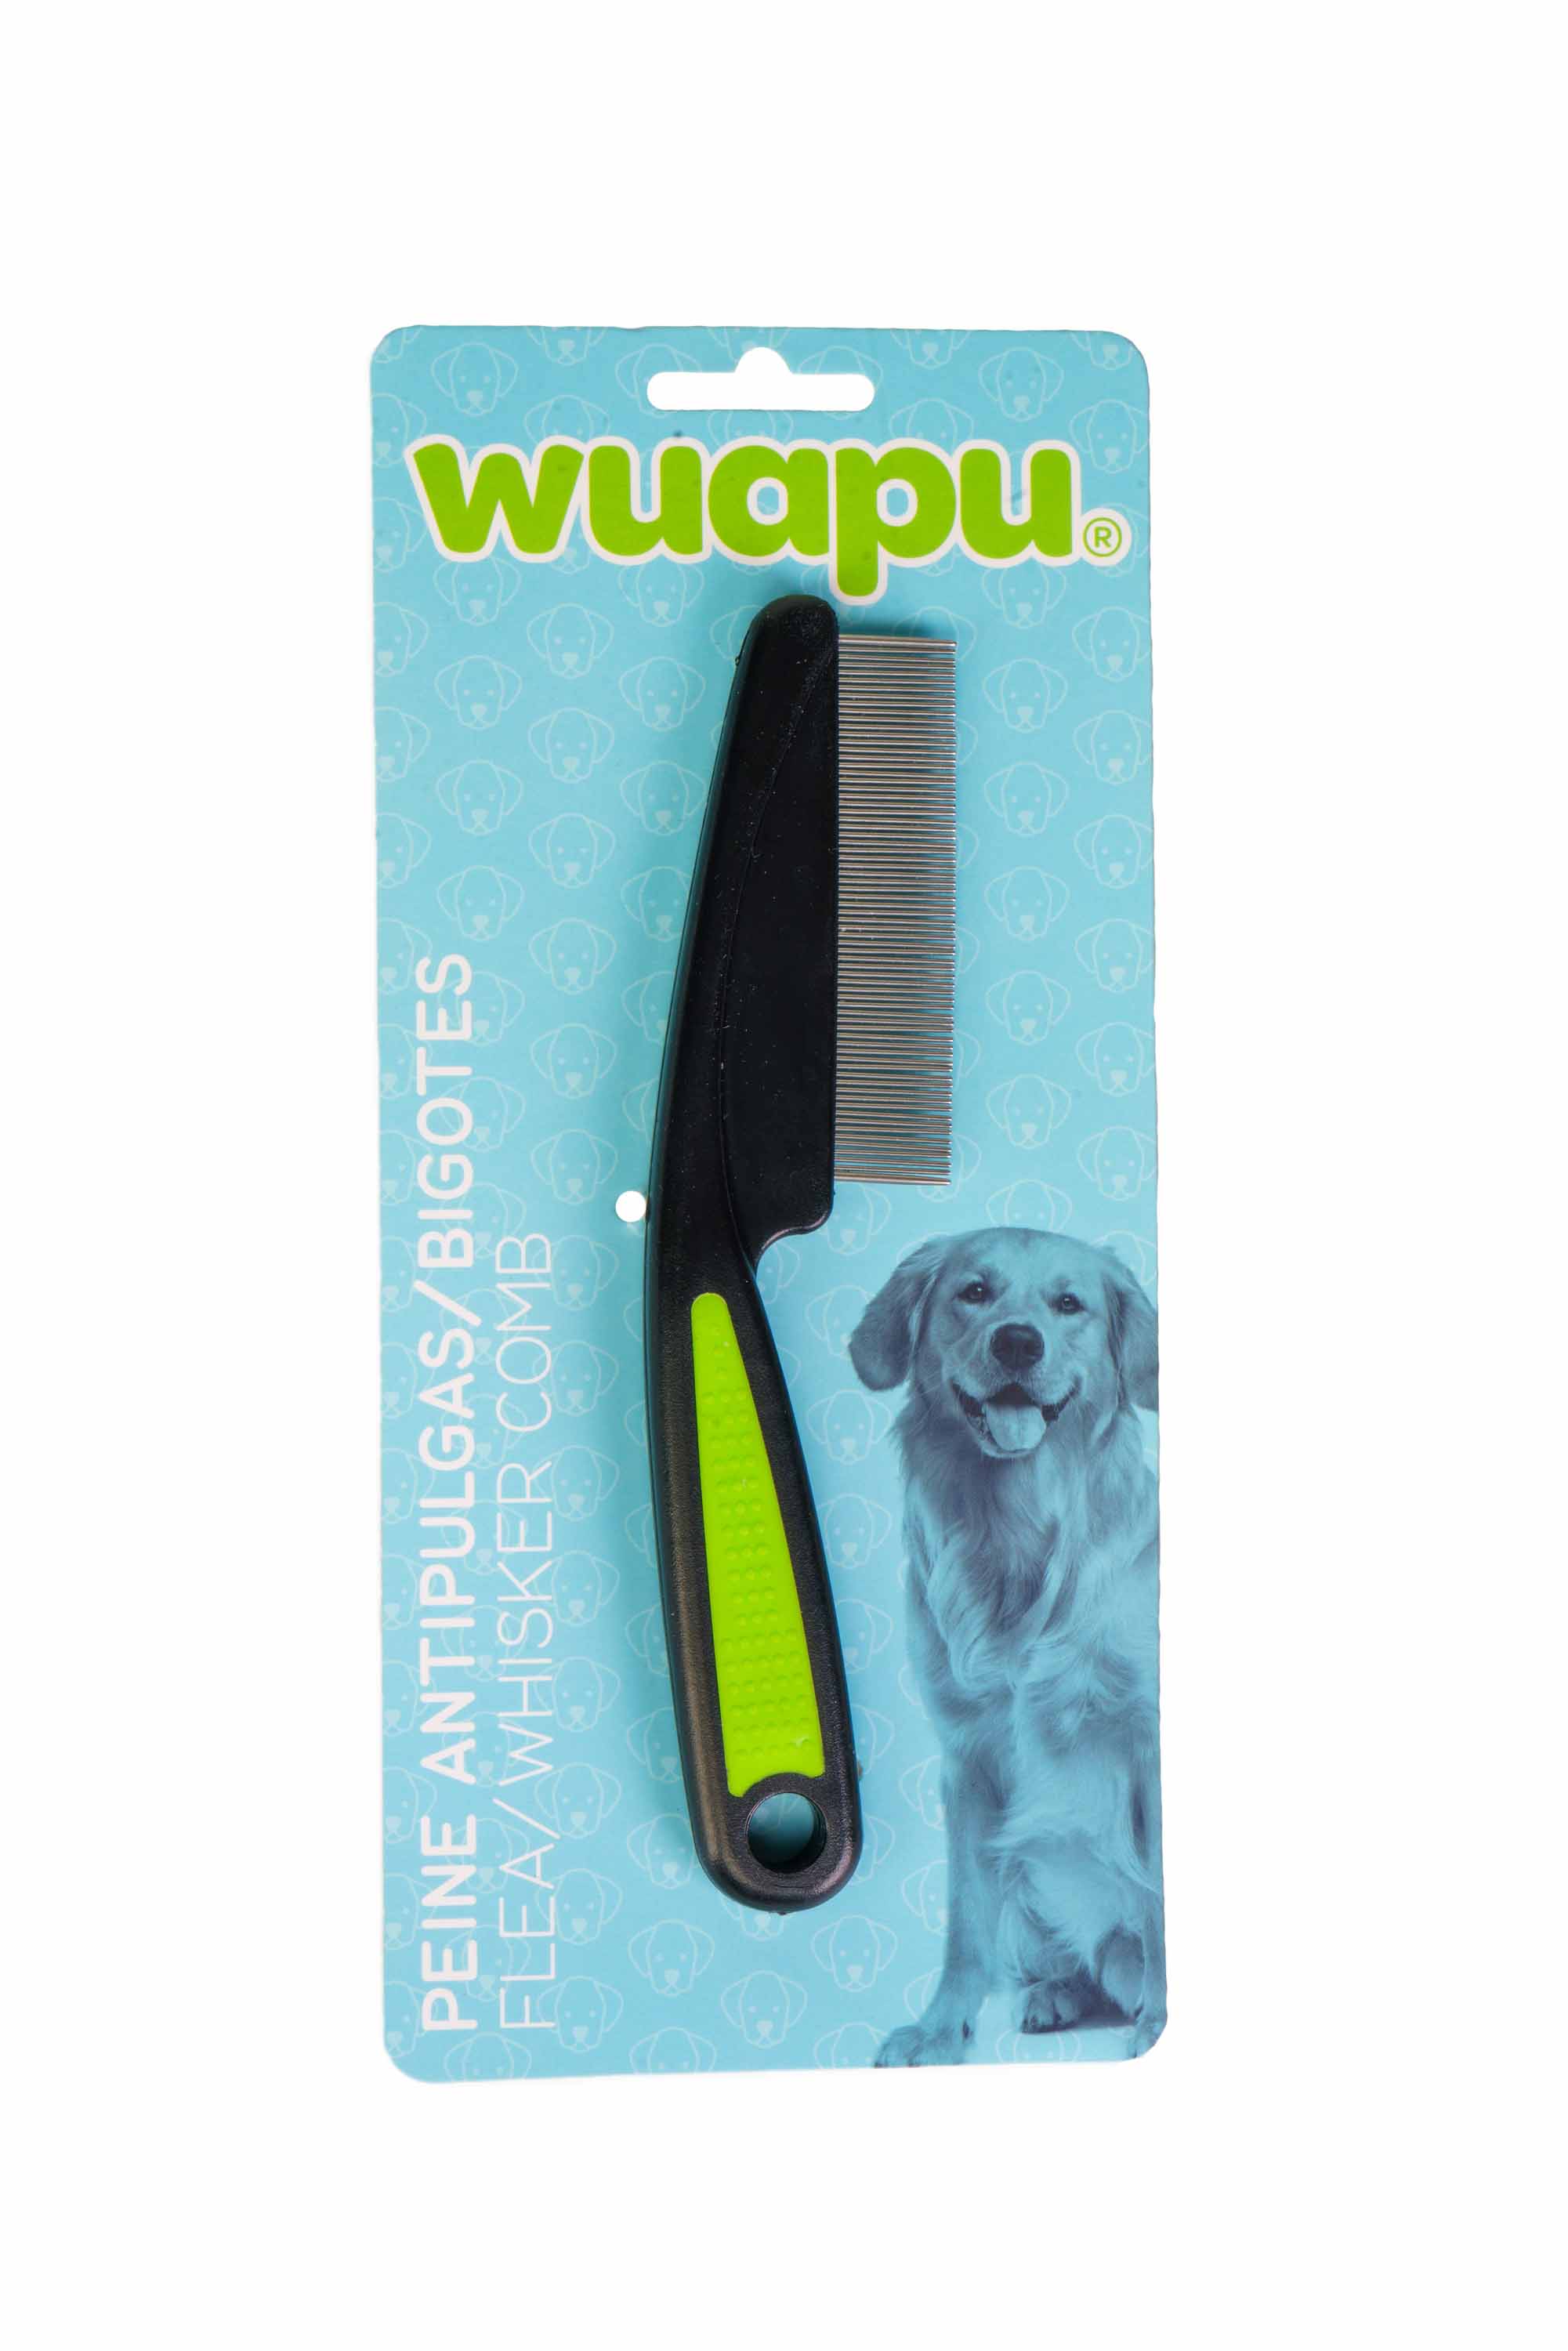 Wuapu Peine antipulgas para perros y gatos